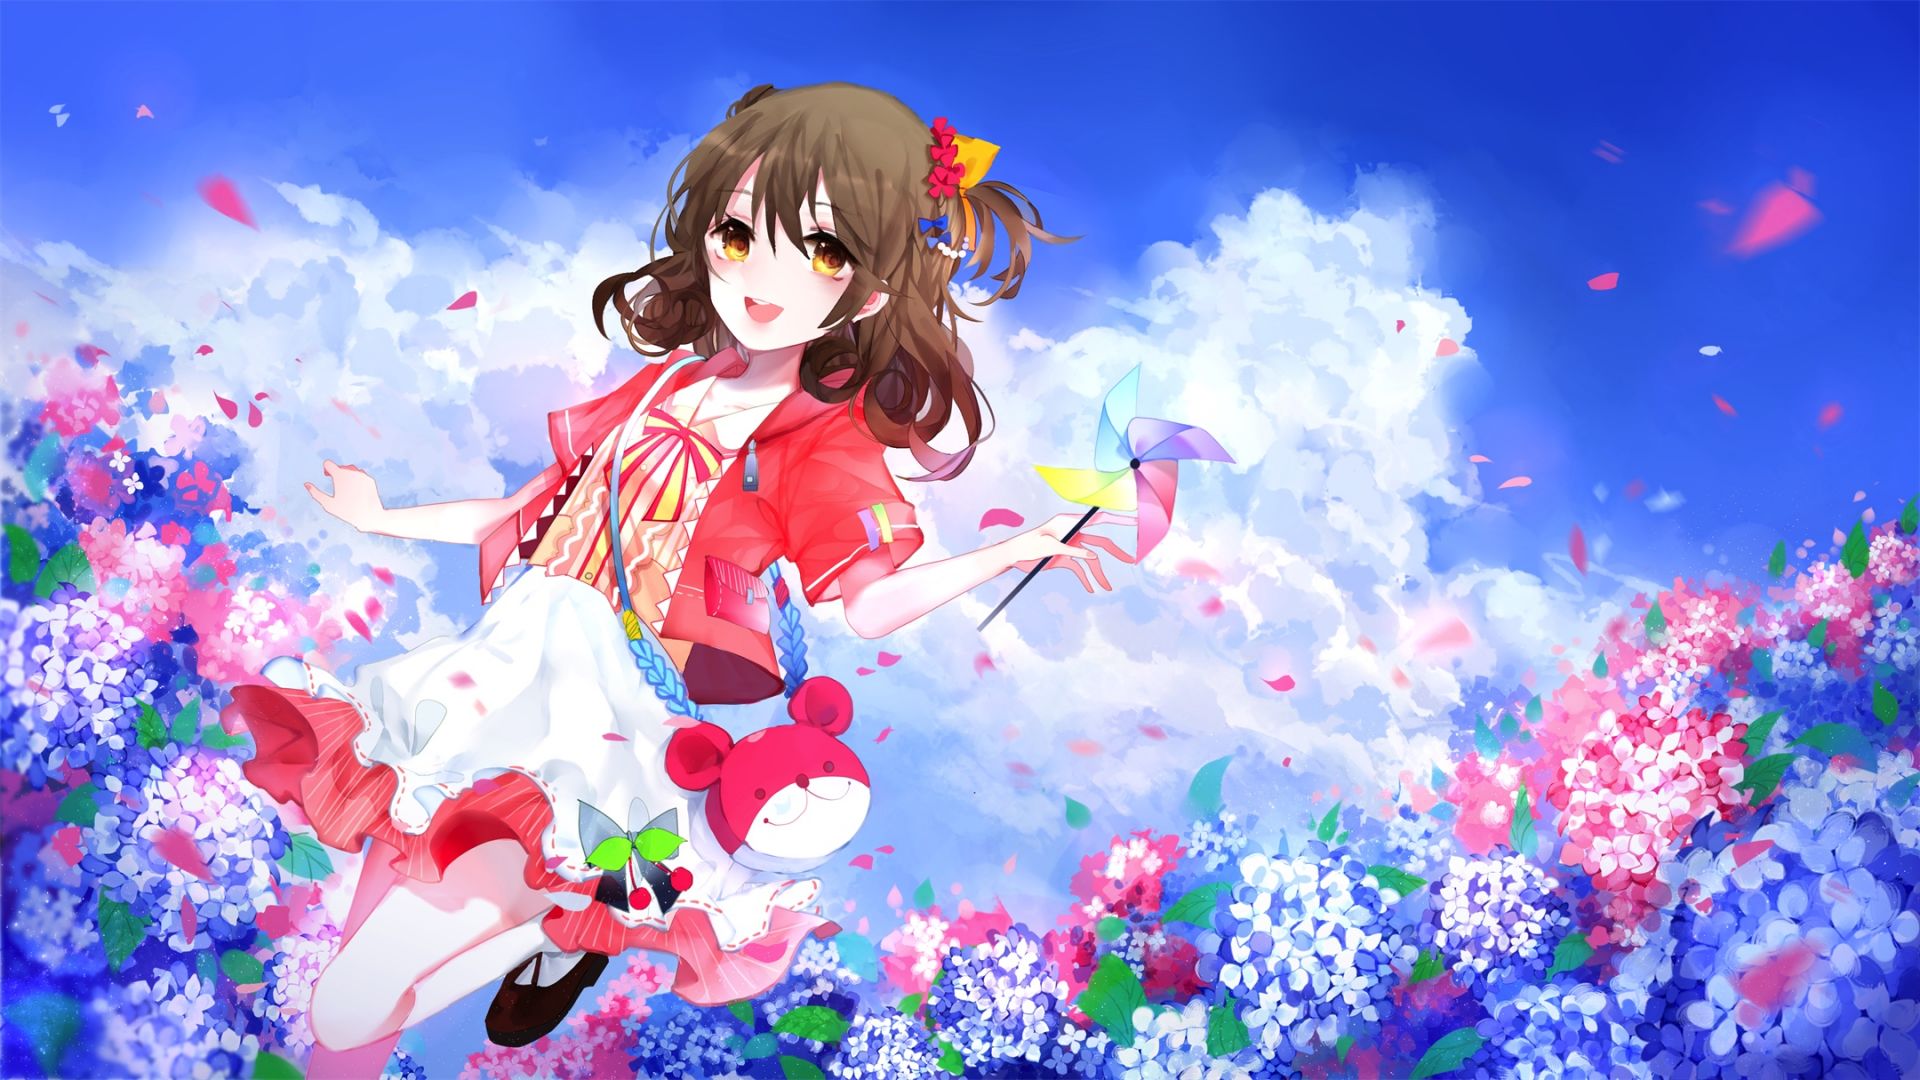 Desktop Wallpaper Original, Anime Girl, Play, Blossom, Garden, Hd Image,  Picture, Background, C696f1